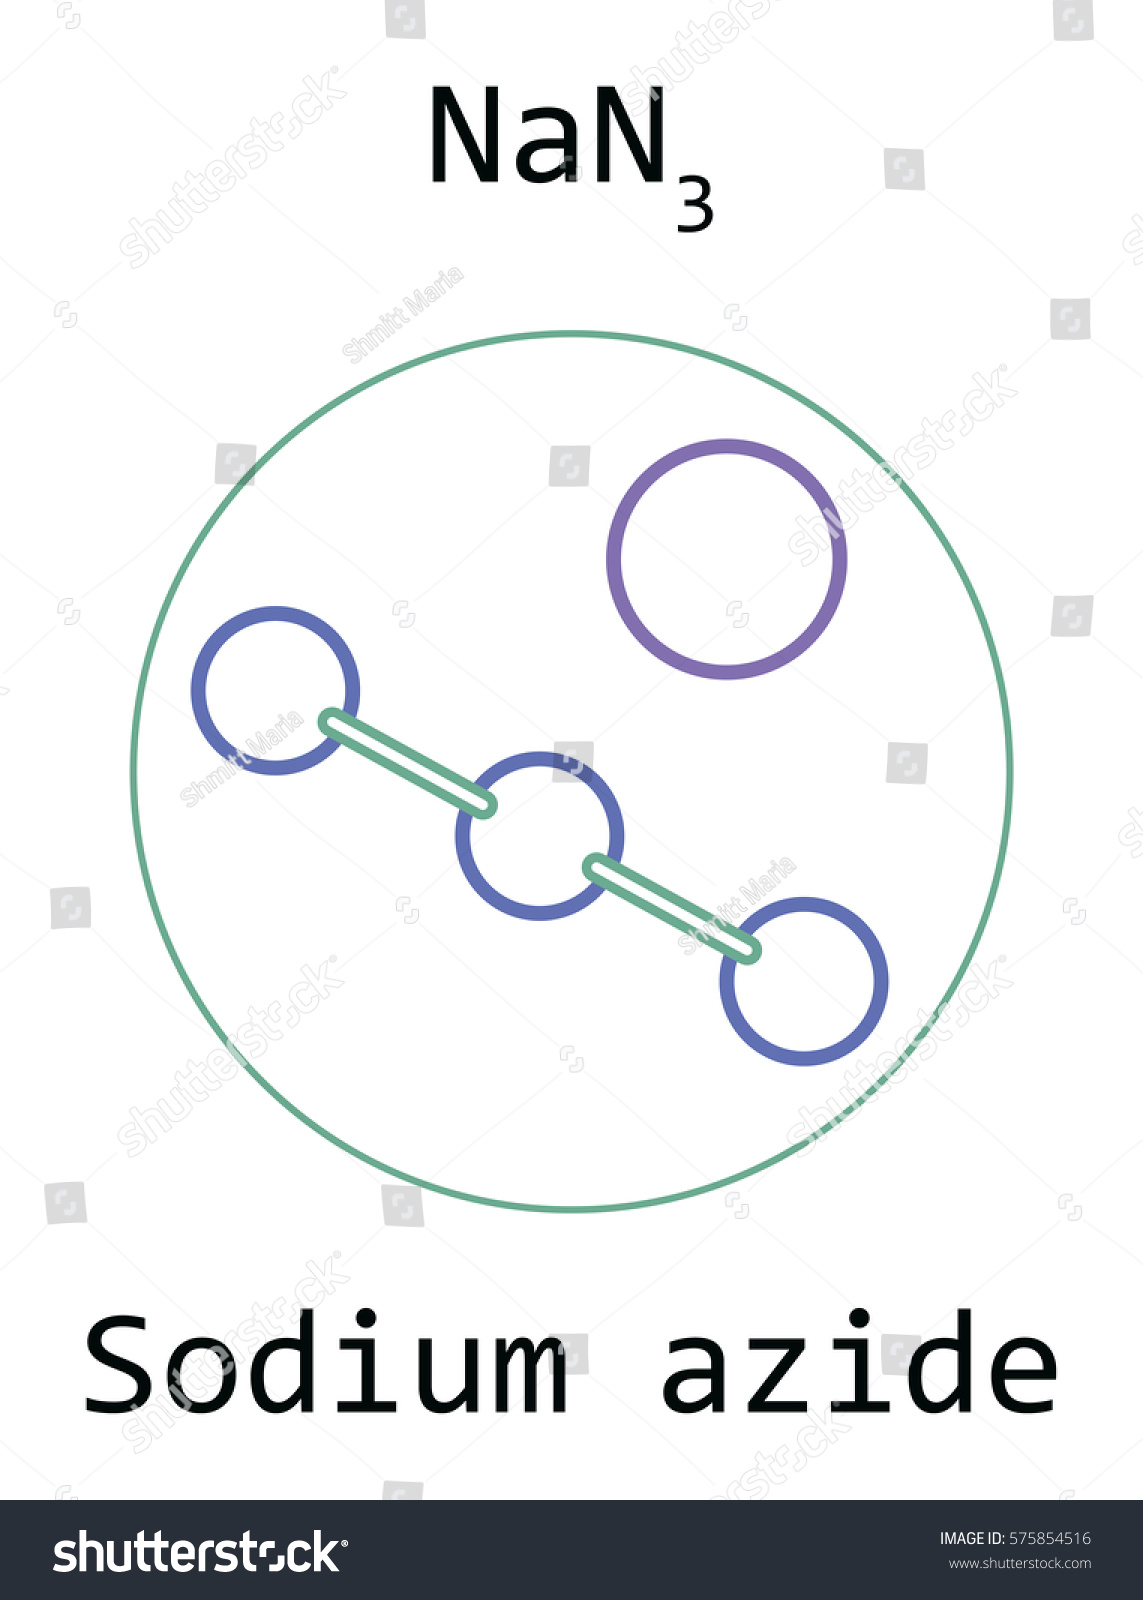 SVG of molecule Sodium azide NaN3 isolated on white svg